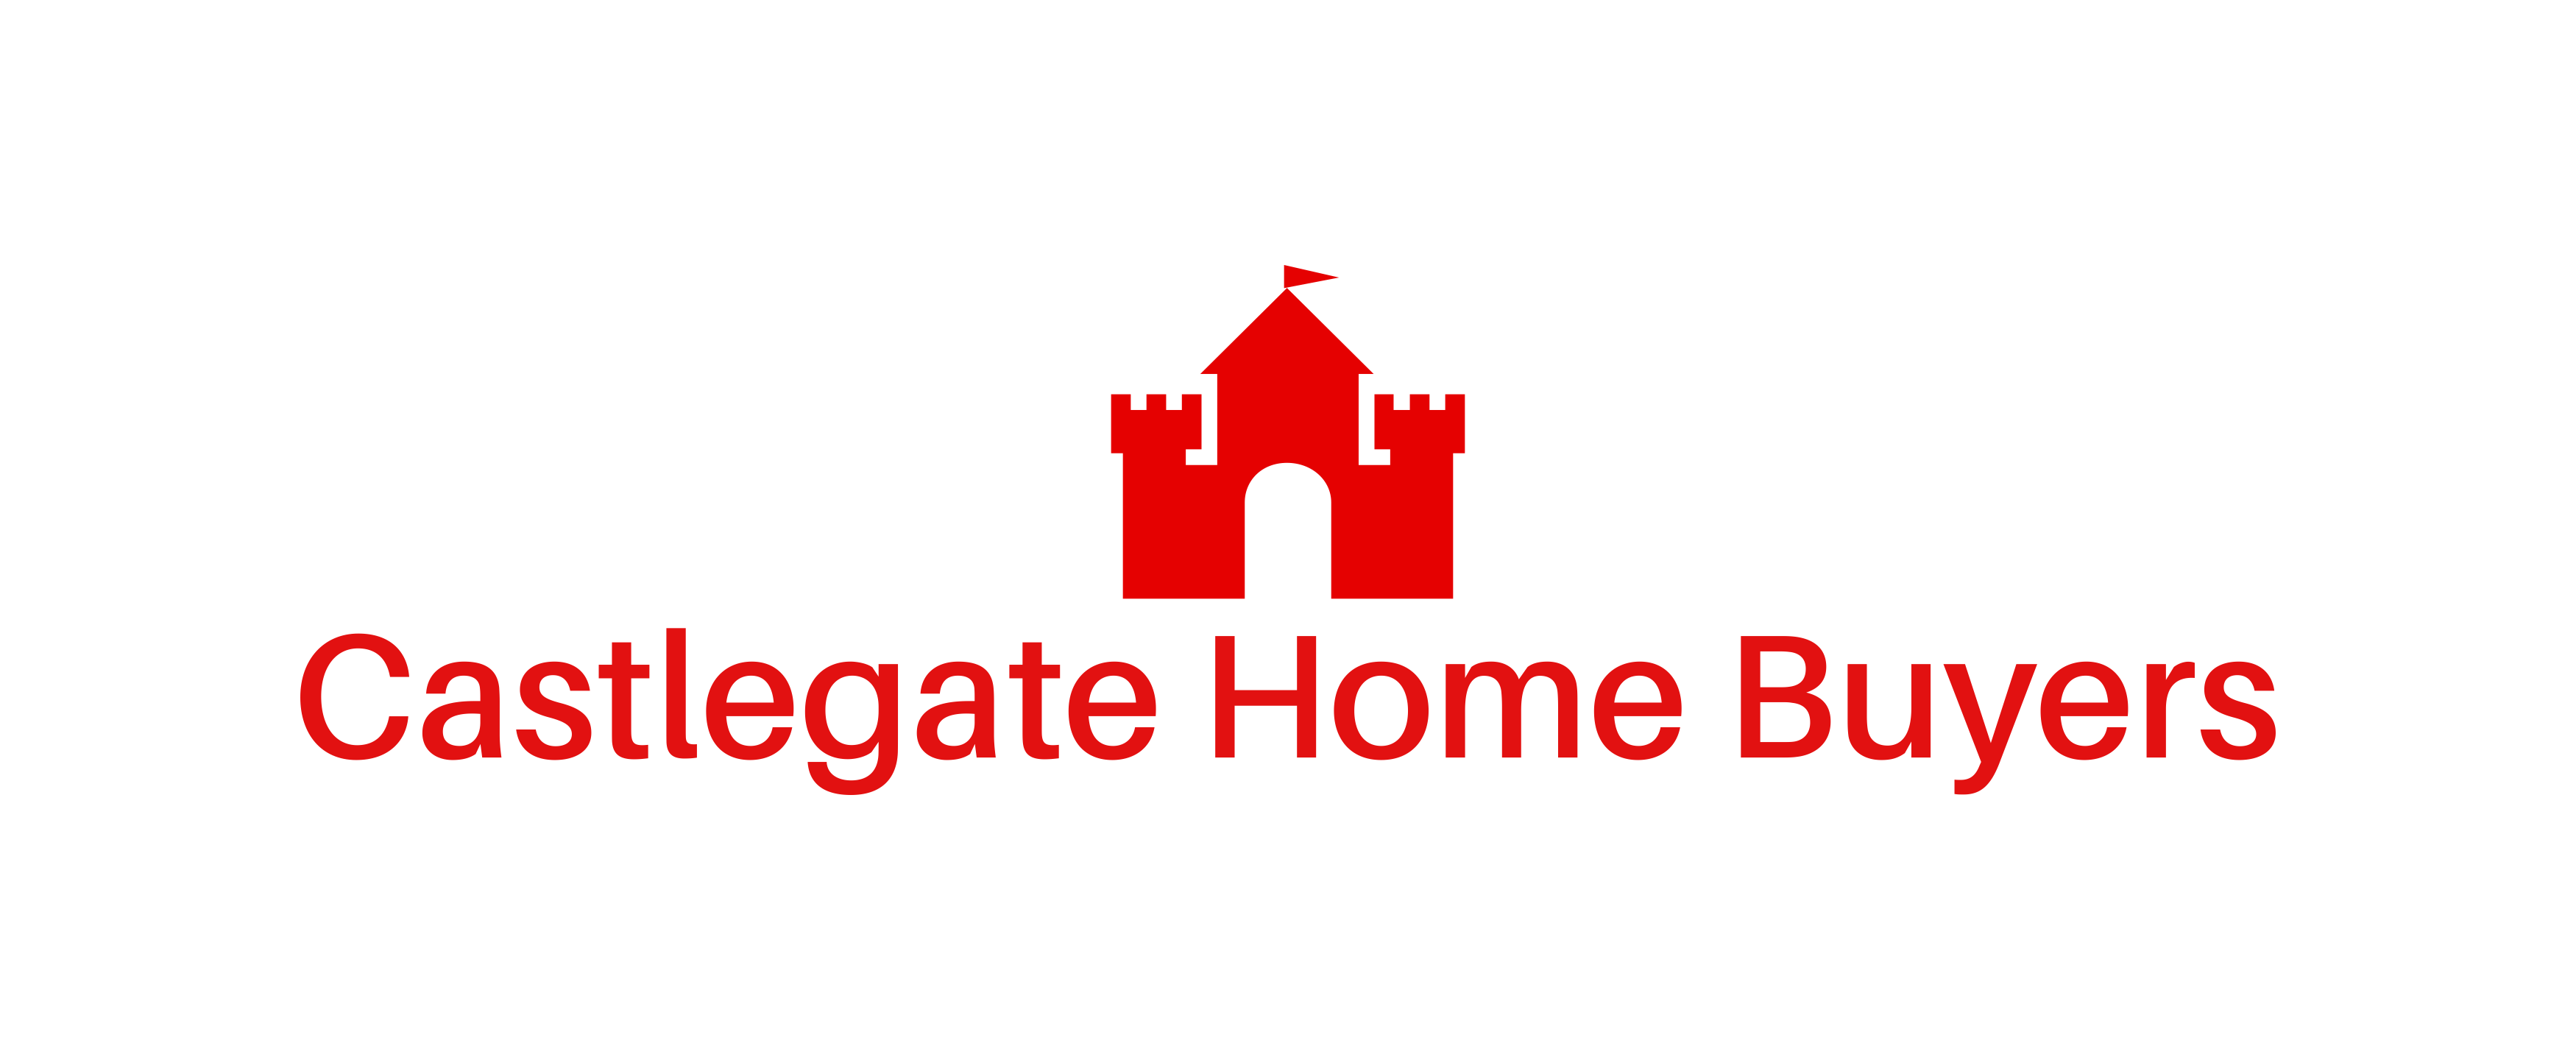 Castlegate Home Buyers logo